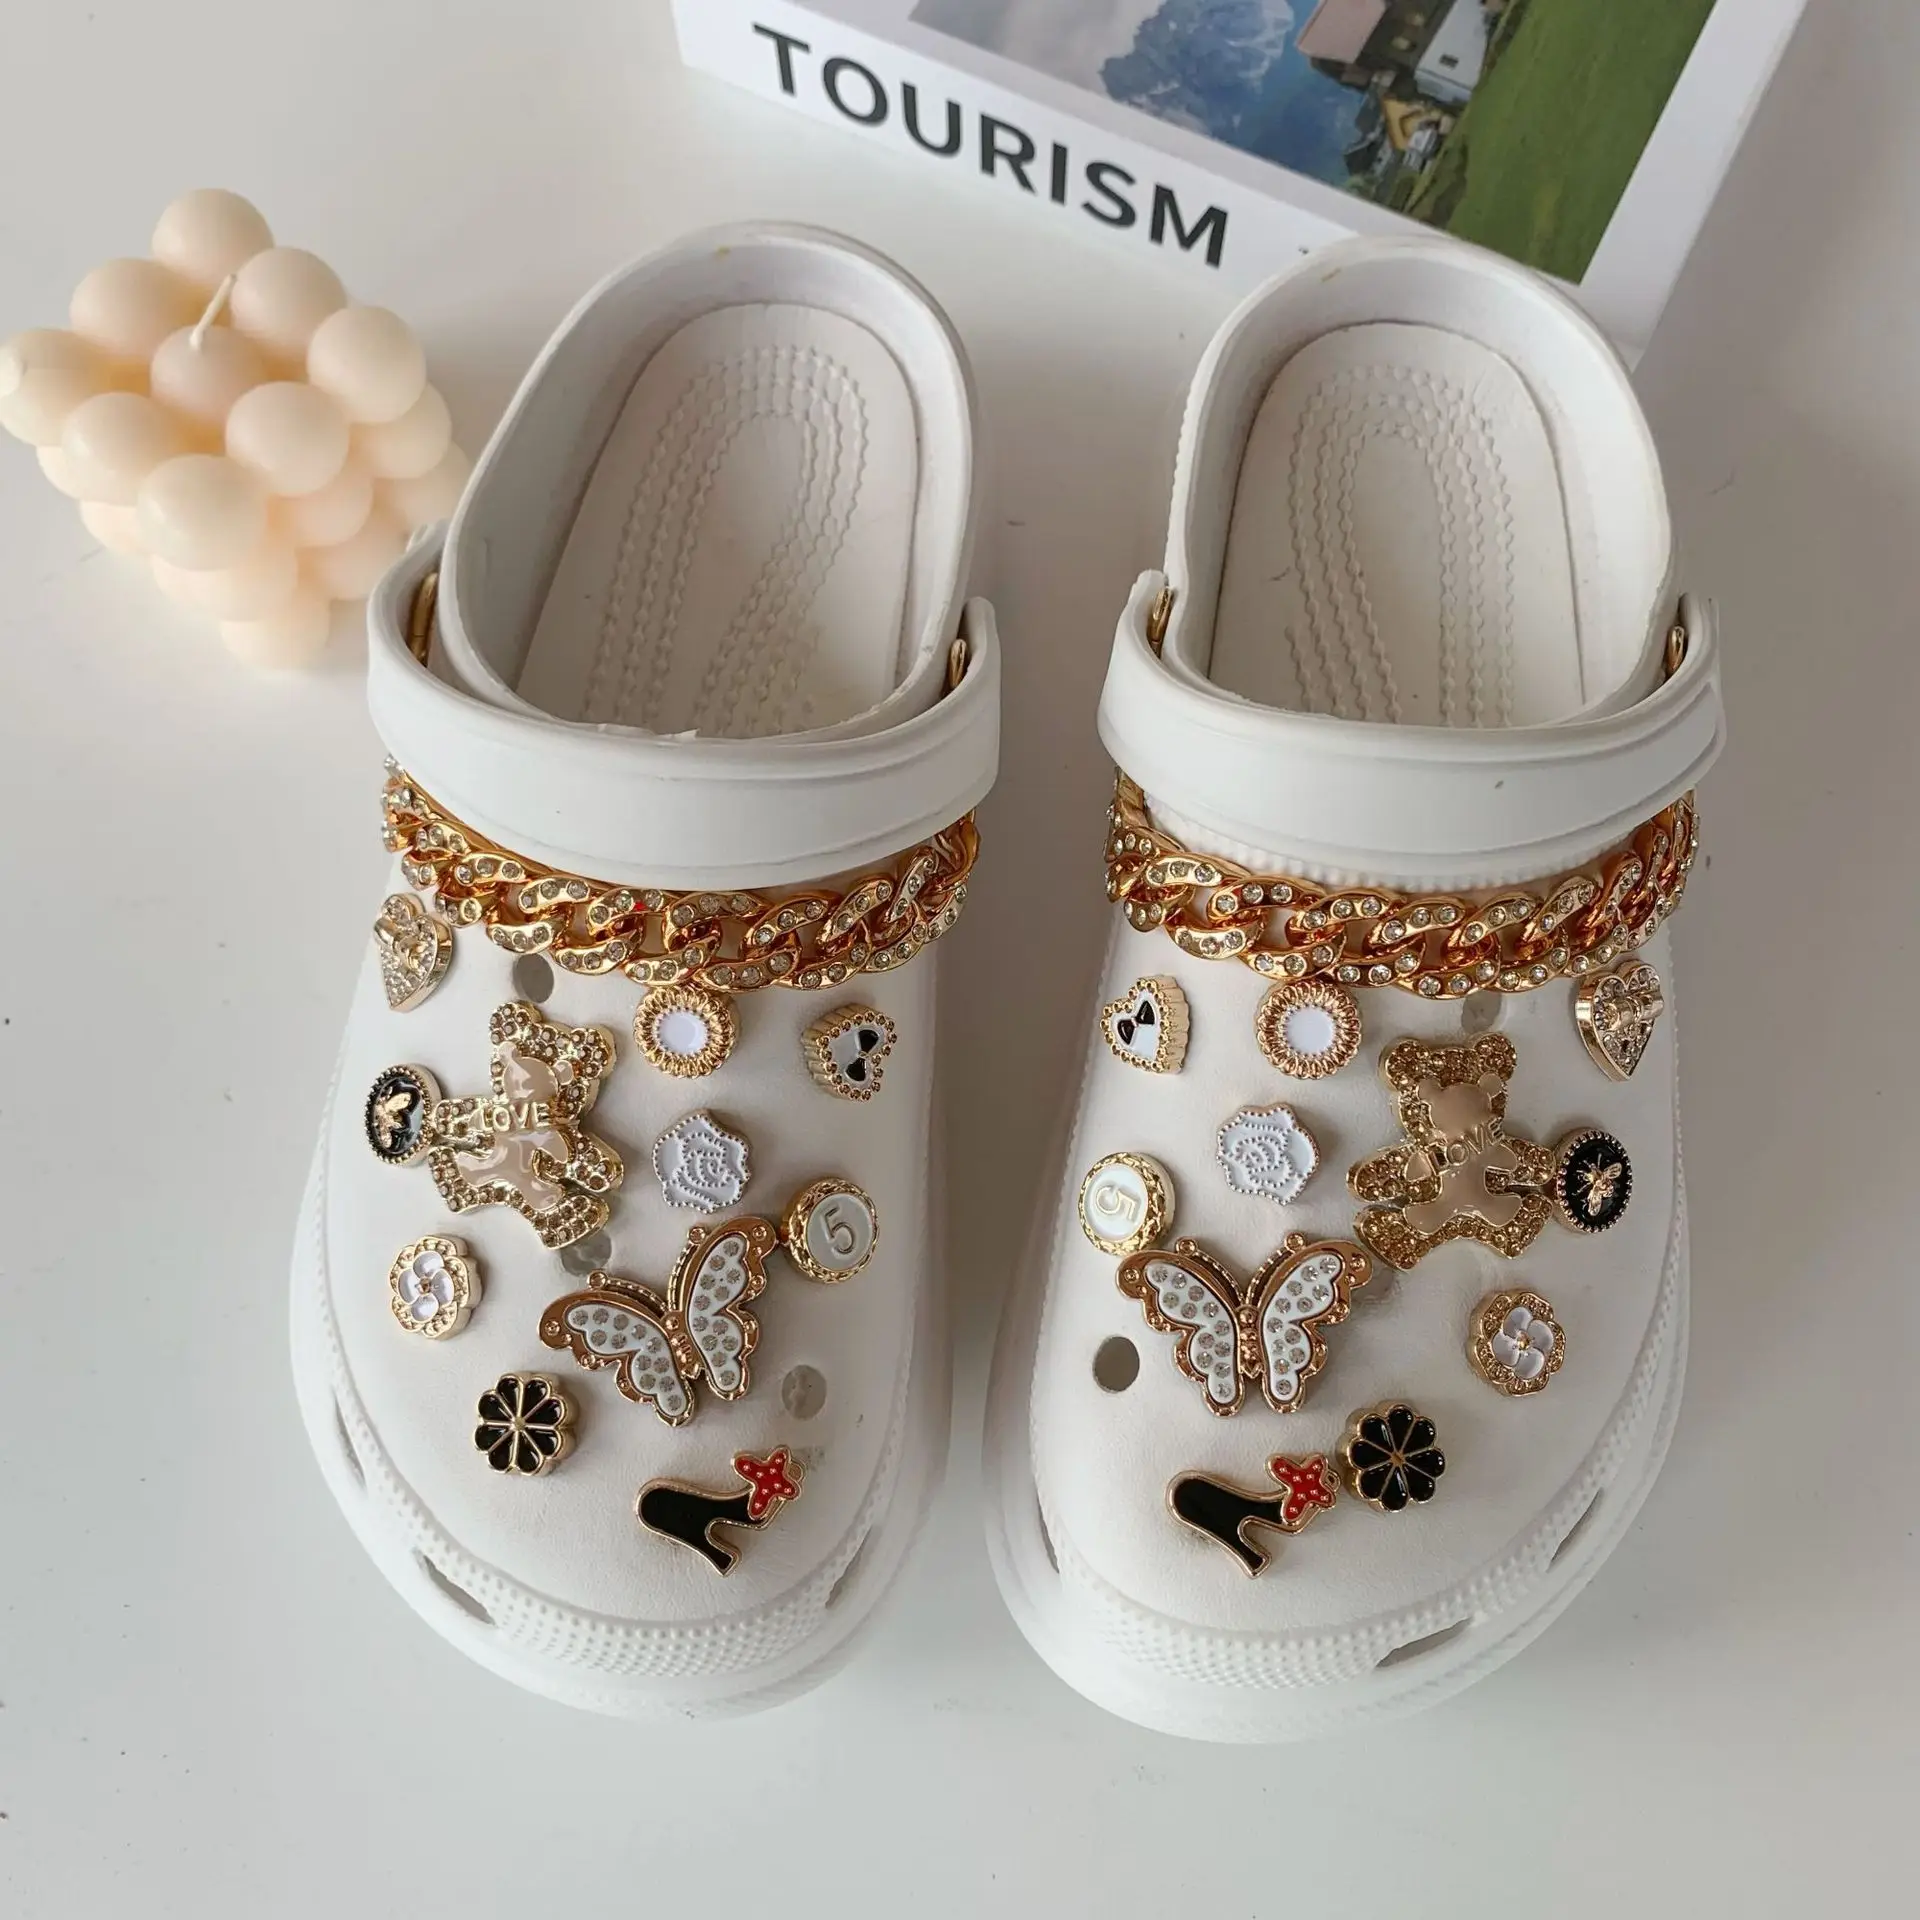 16PCS/Set DIY Pearl Croc Shoes Charms Luxury Bling Chain Shoe Decoration  Buckle For Women Girls Croc Gift Shoelace Accessories